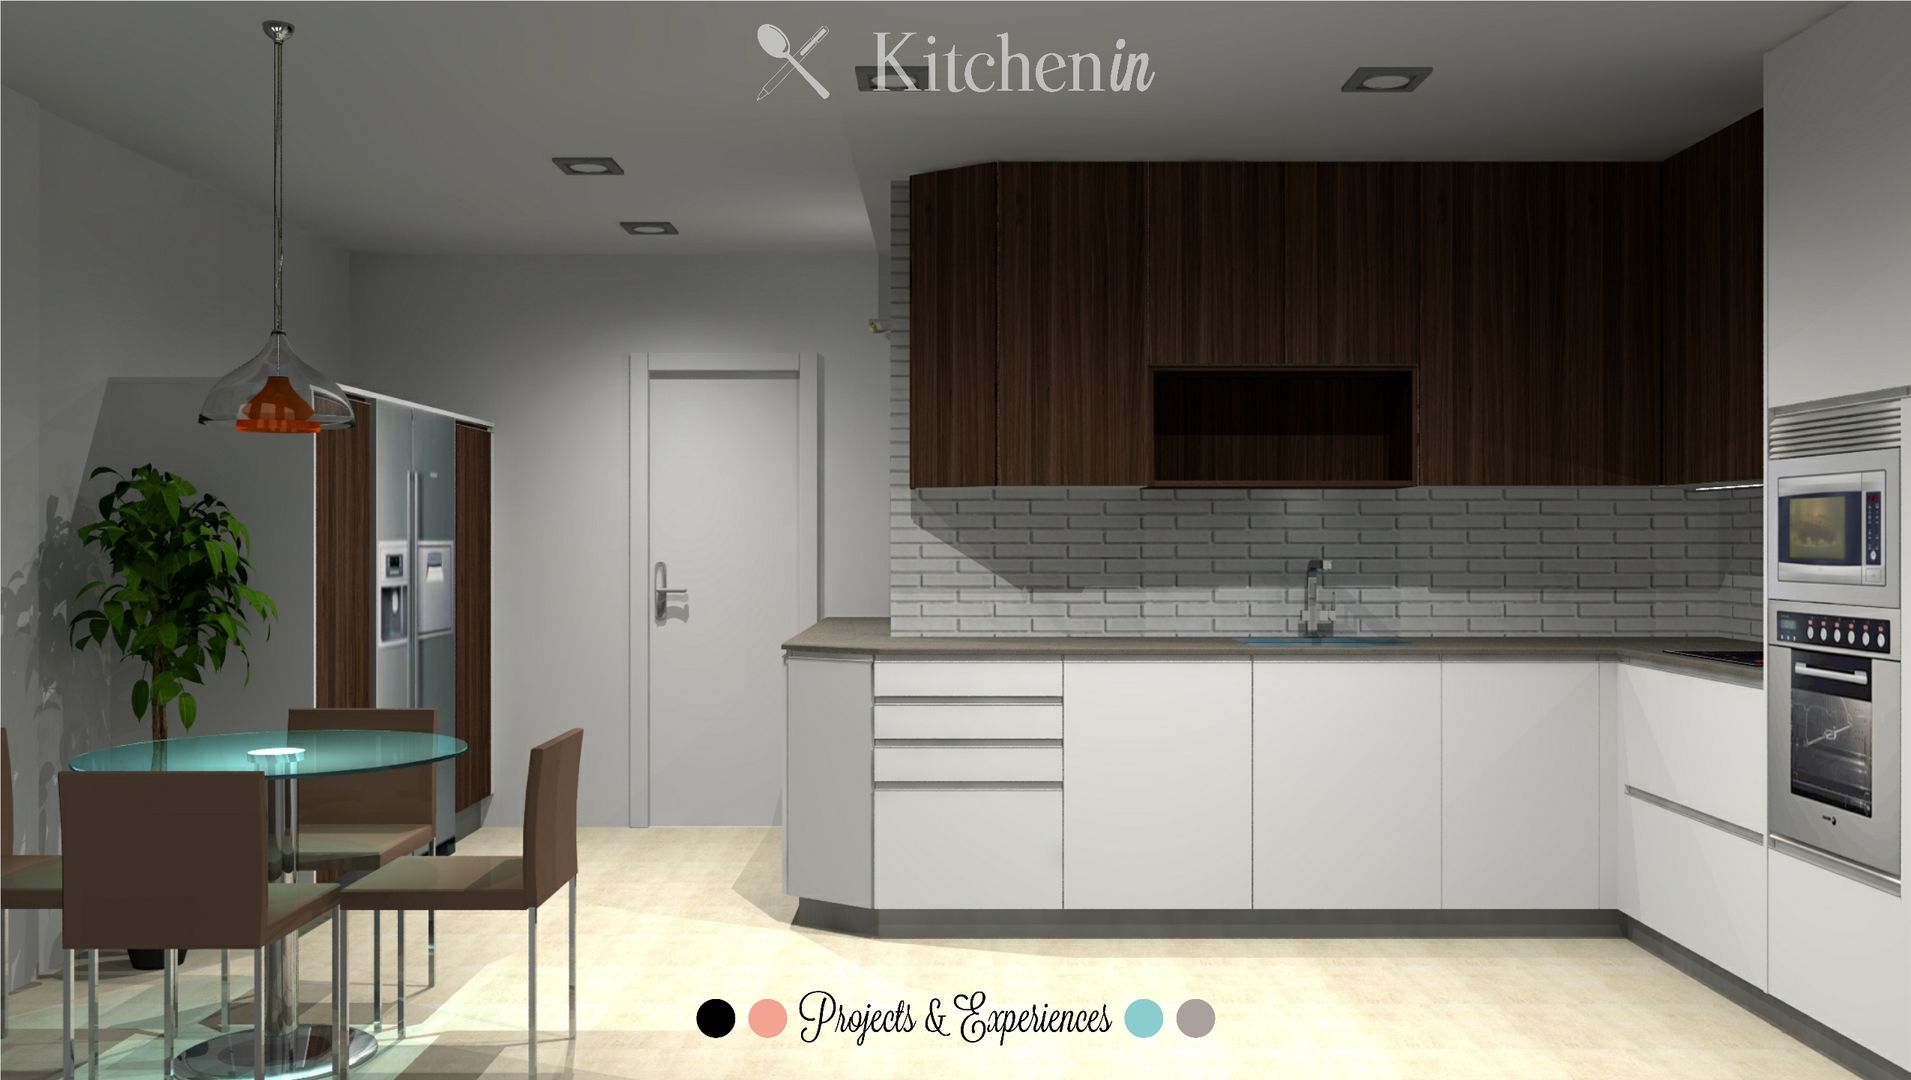 Cozinha CS Kitchen In Cozinhas modernas Aglomerado cozinha,kitchen,design